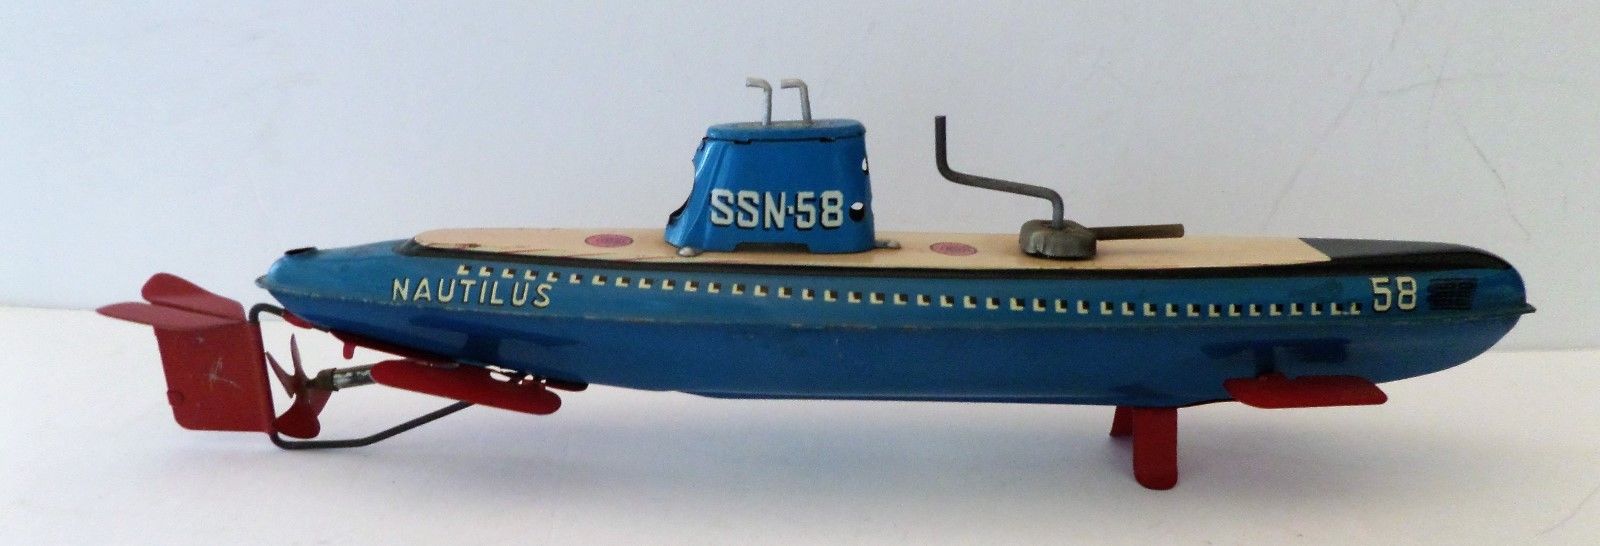 Vintage Nautilus Submarine SSN-58 Made By Marusan Toys Japan 1950's